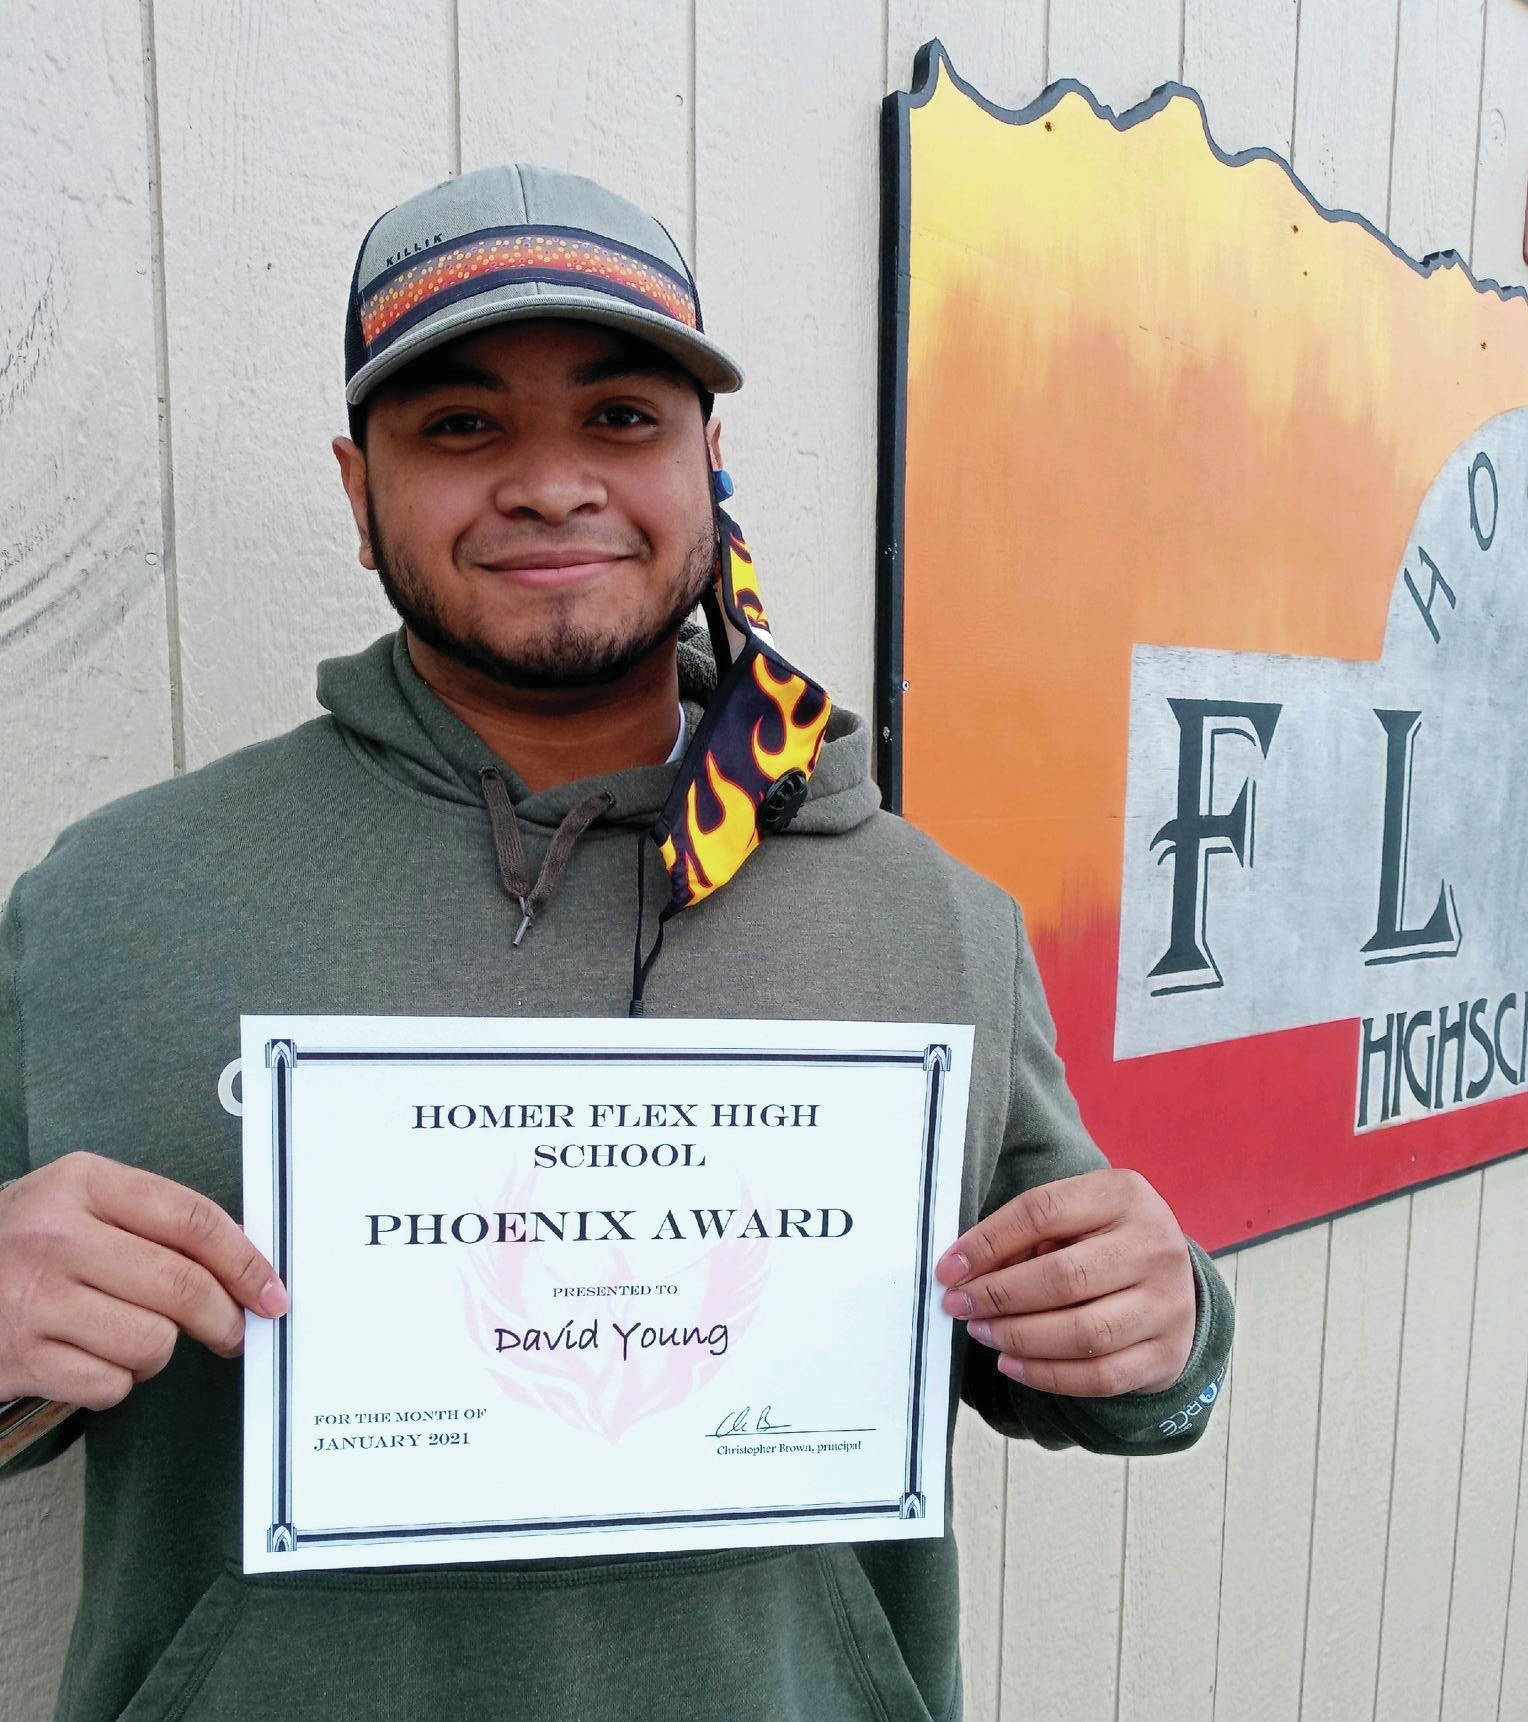 Homer Flex High School Phoenix Award winner David Young holds his certificate on March 25, 2021, at Flex High School in Homer, Alaska. (Photo courtesy of Homer Flex High School)